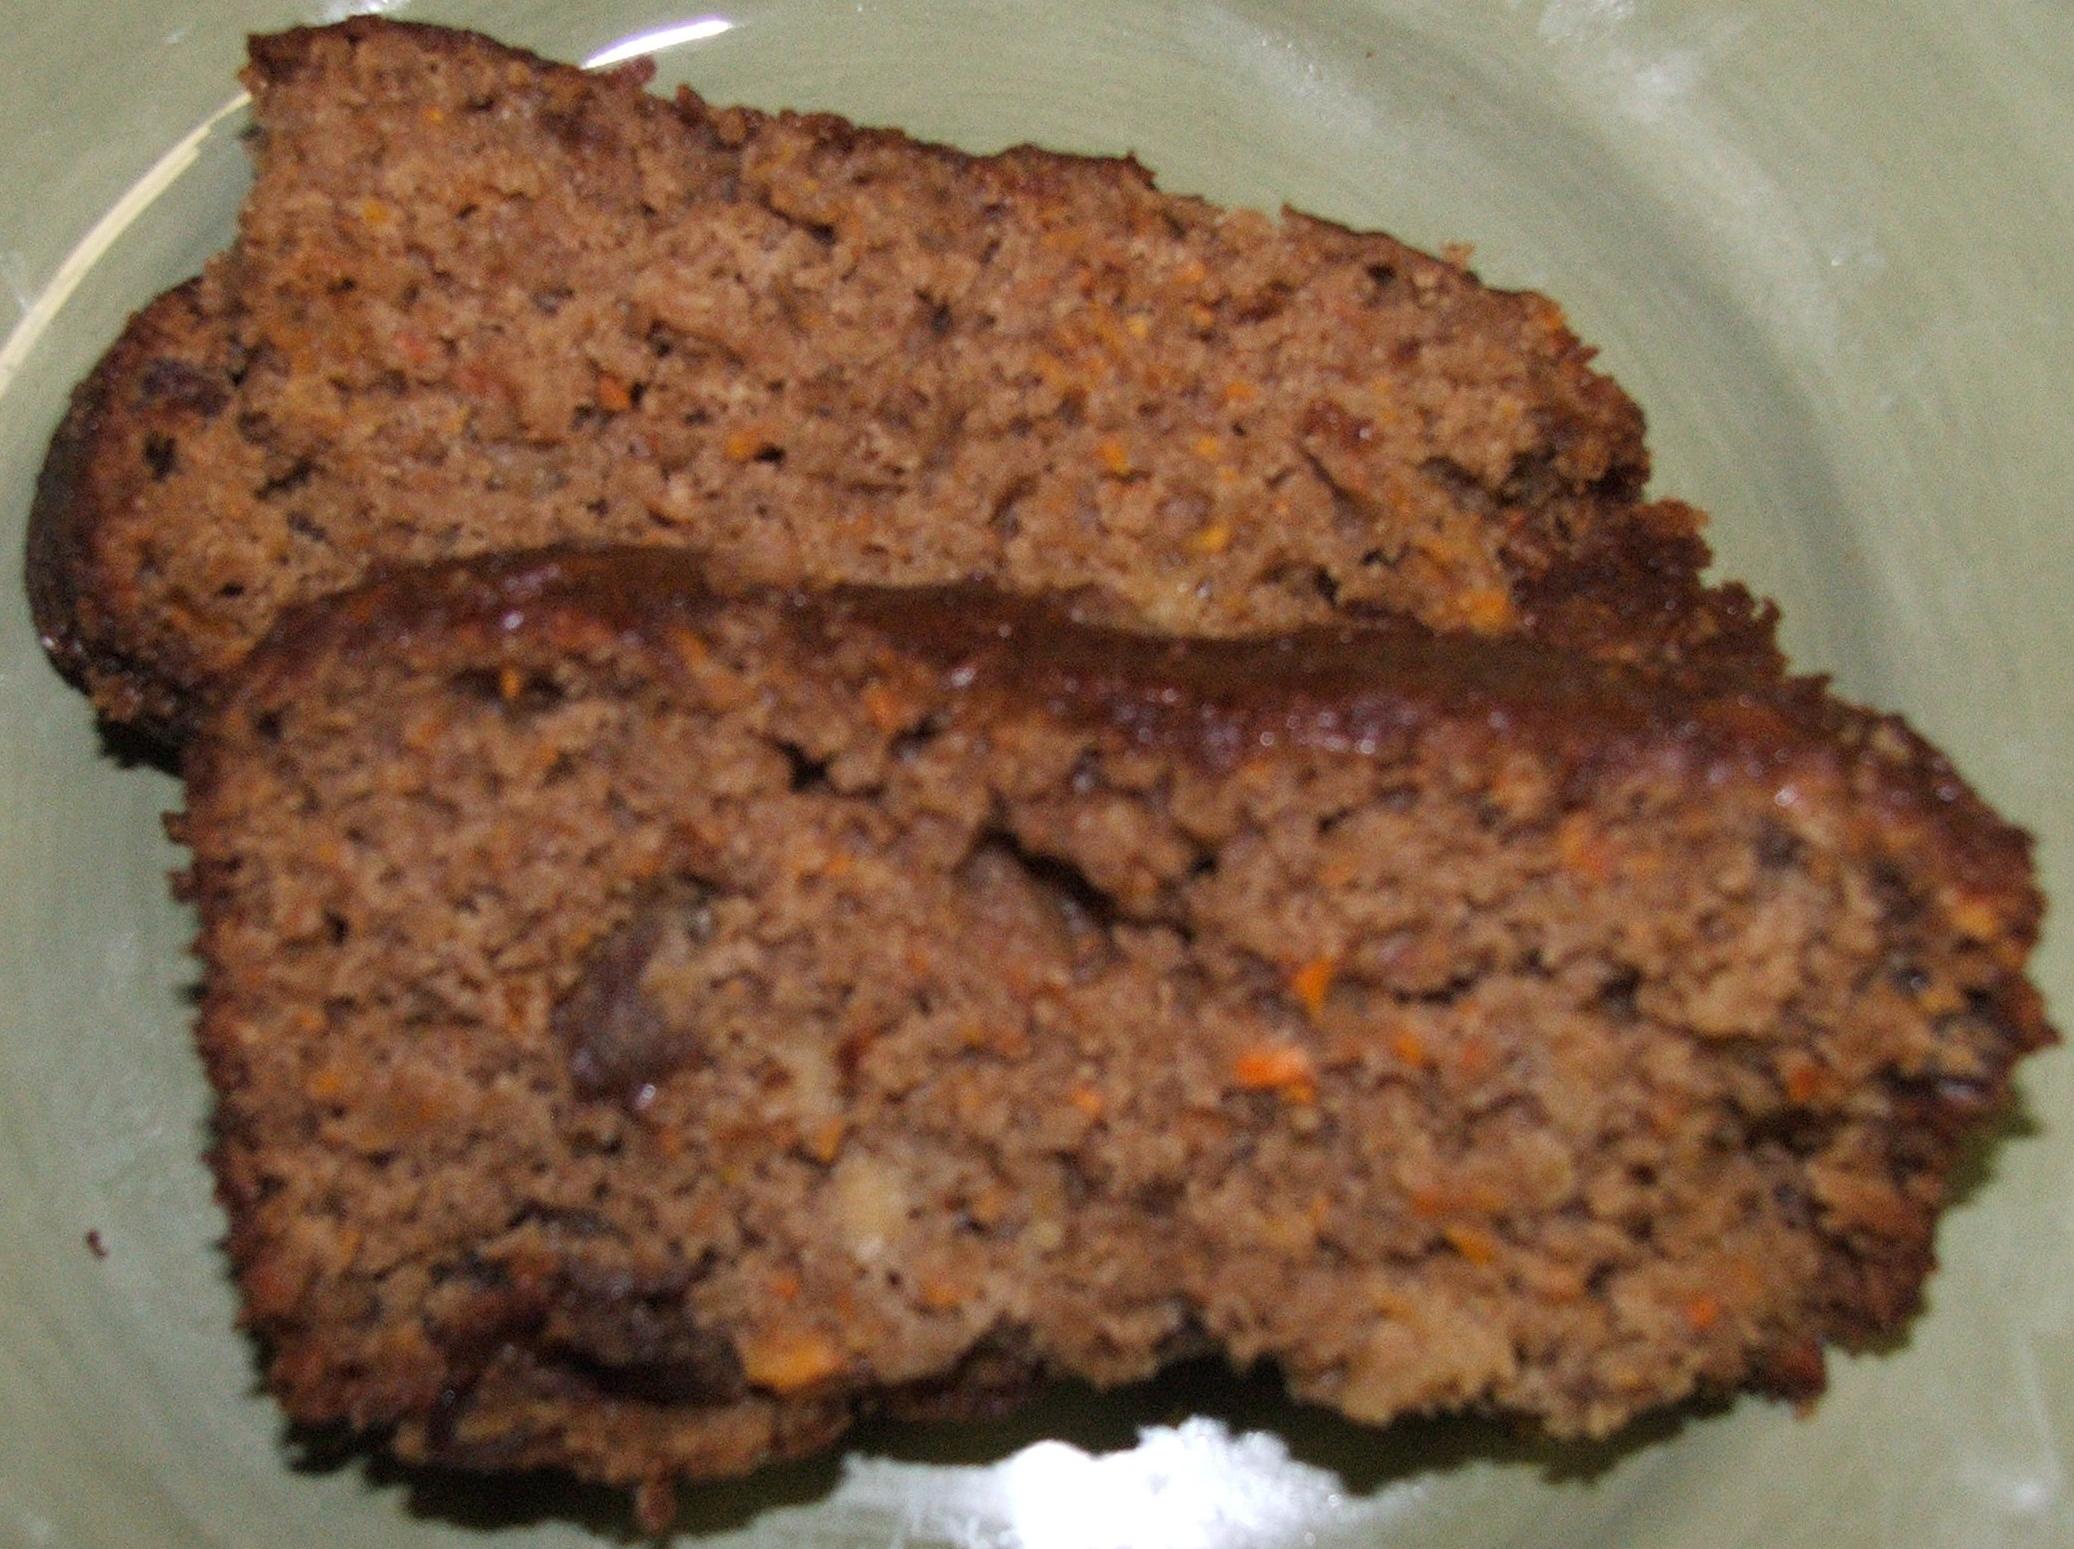 Mimi's Cafe Carrot Bread - Original Recipe